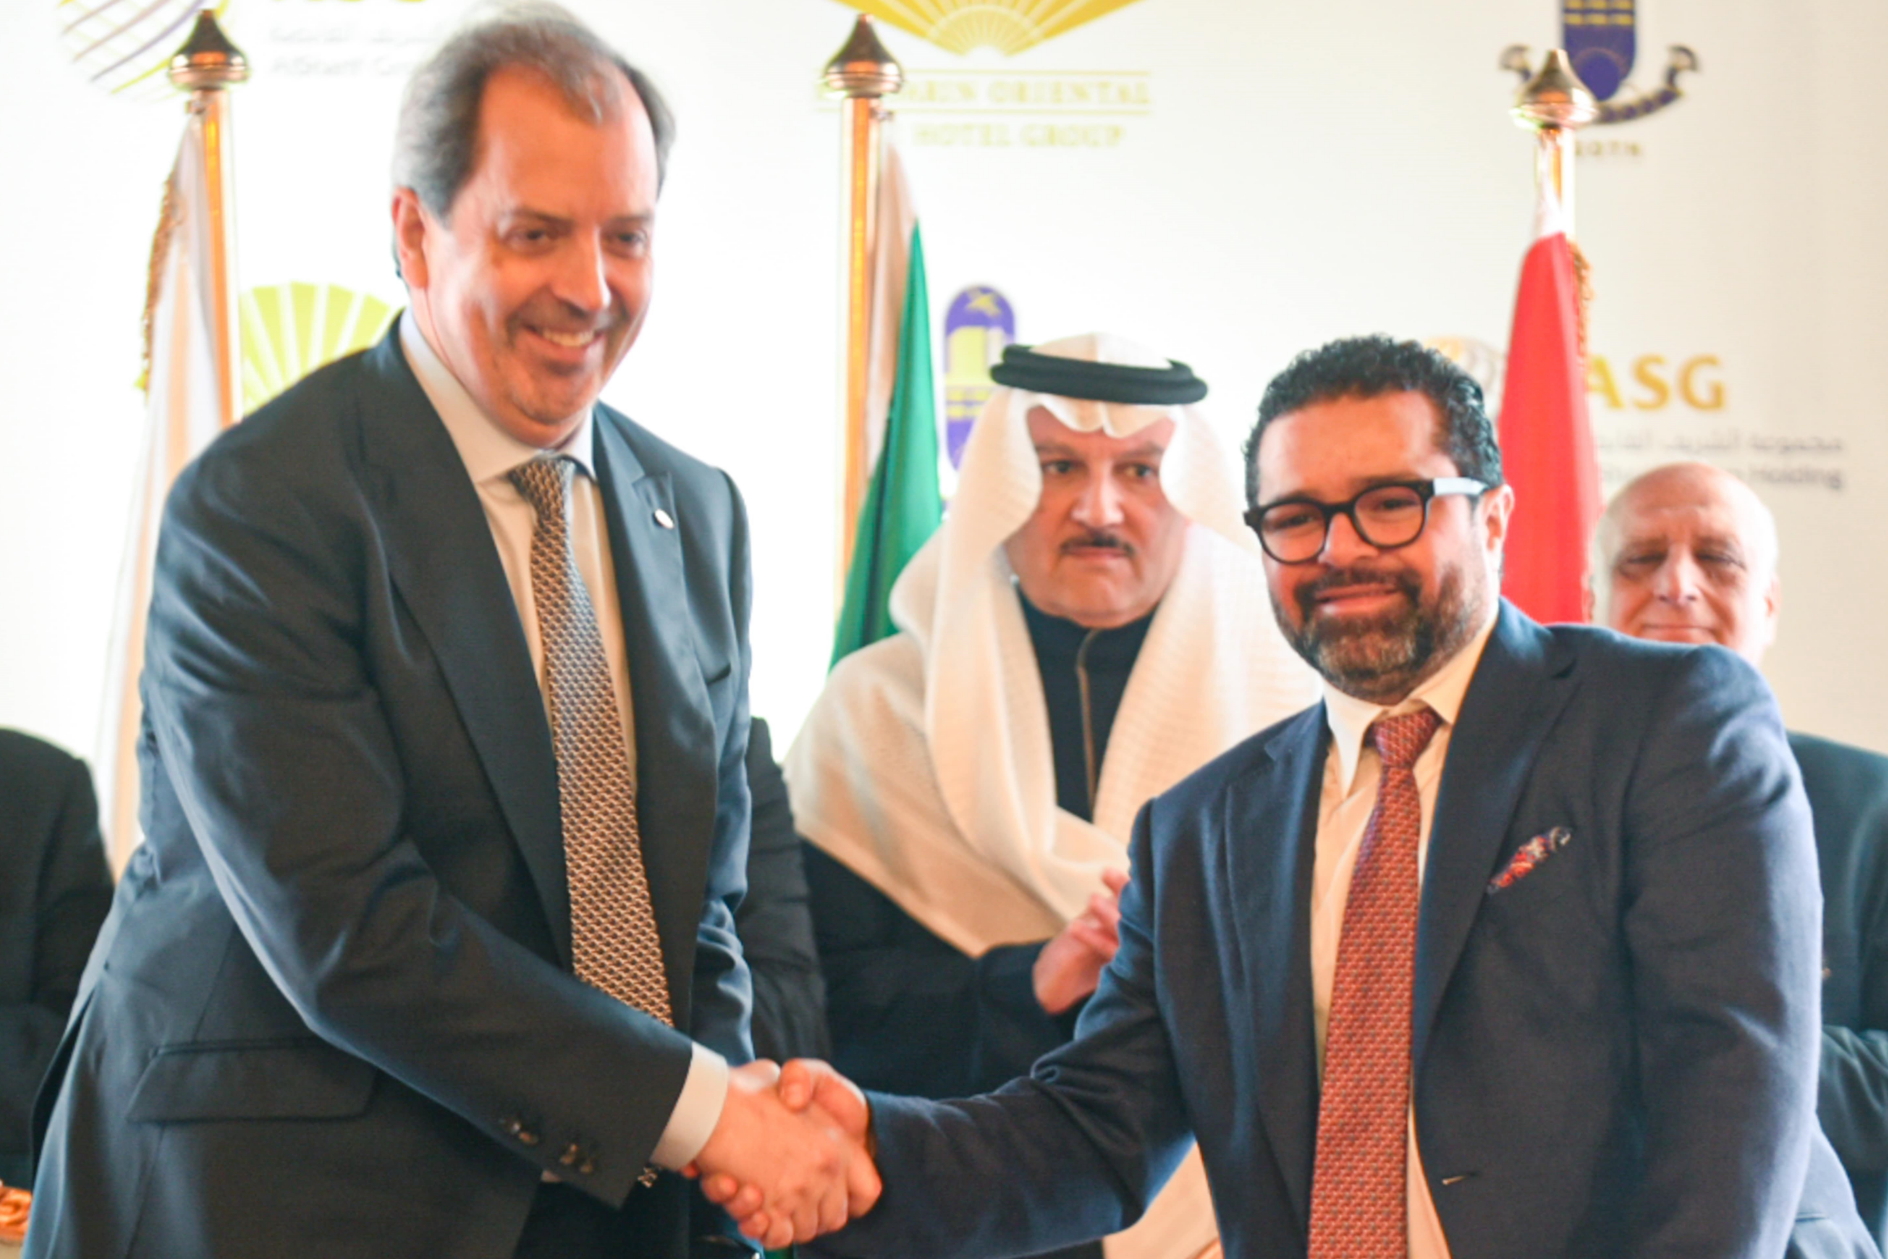 Paul Massot (left), Chief Development Officer of Mandarin Oriental, with Nawaf Faiz Al-Sharif, President of Al-Sharif Group. Click to enlarge.